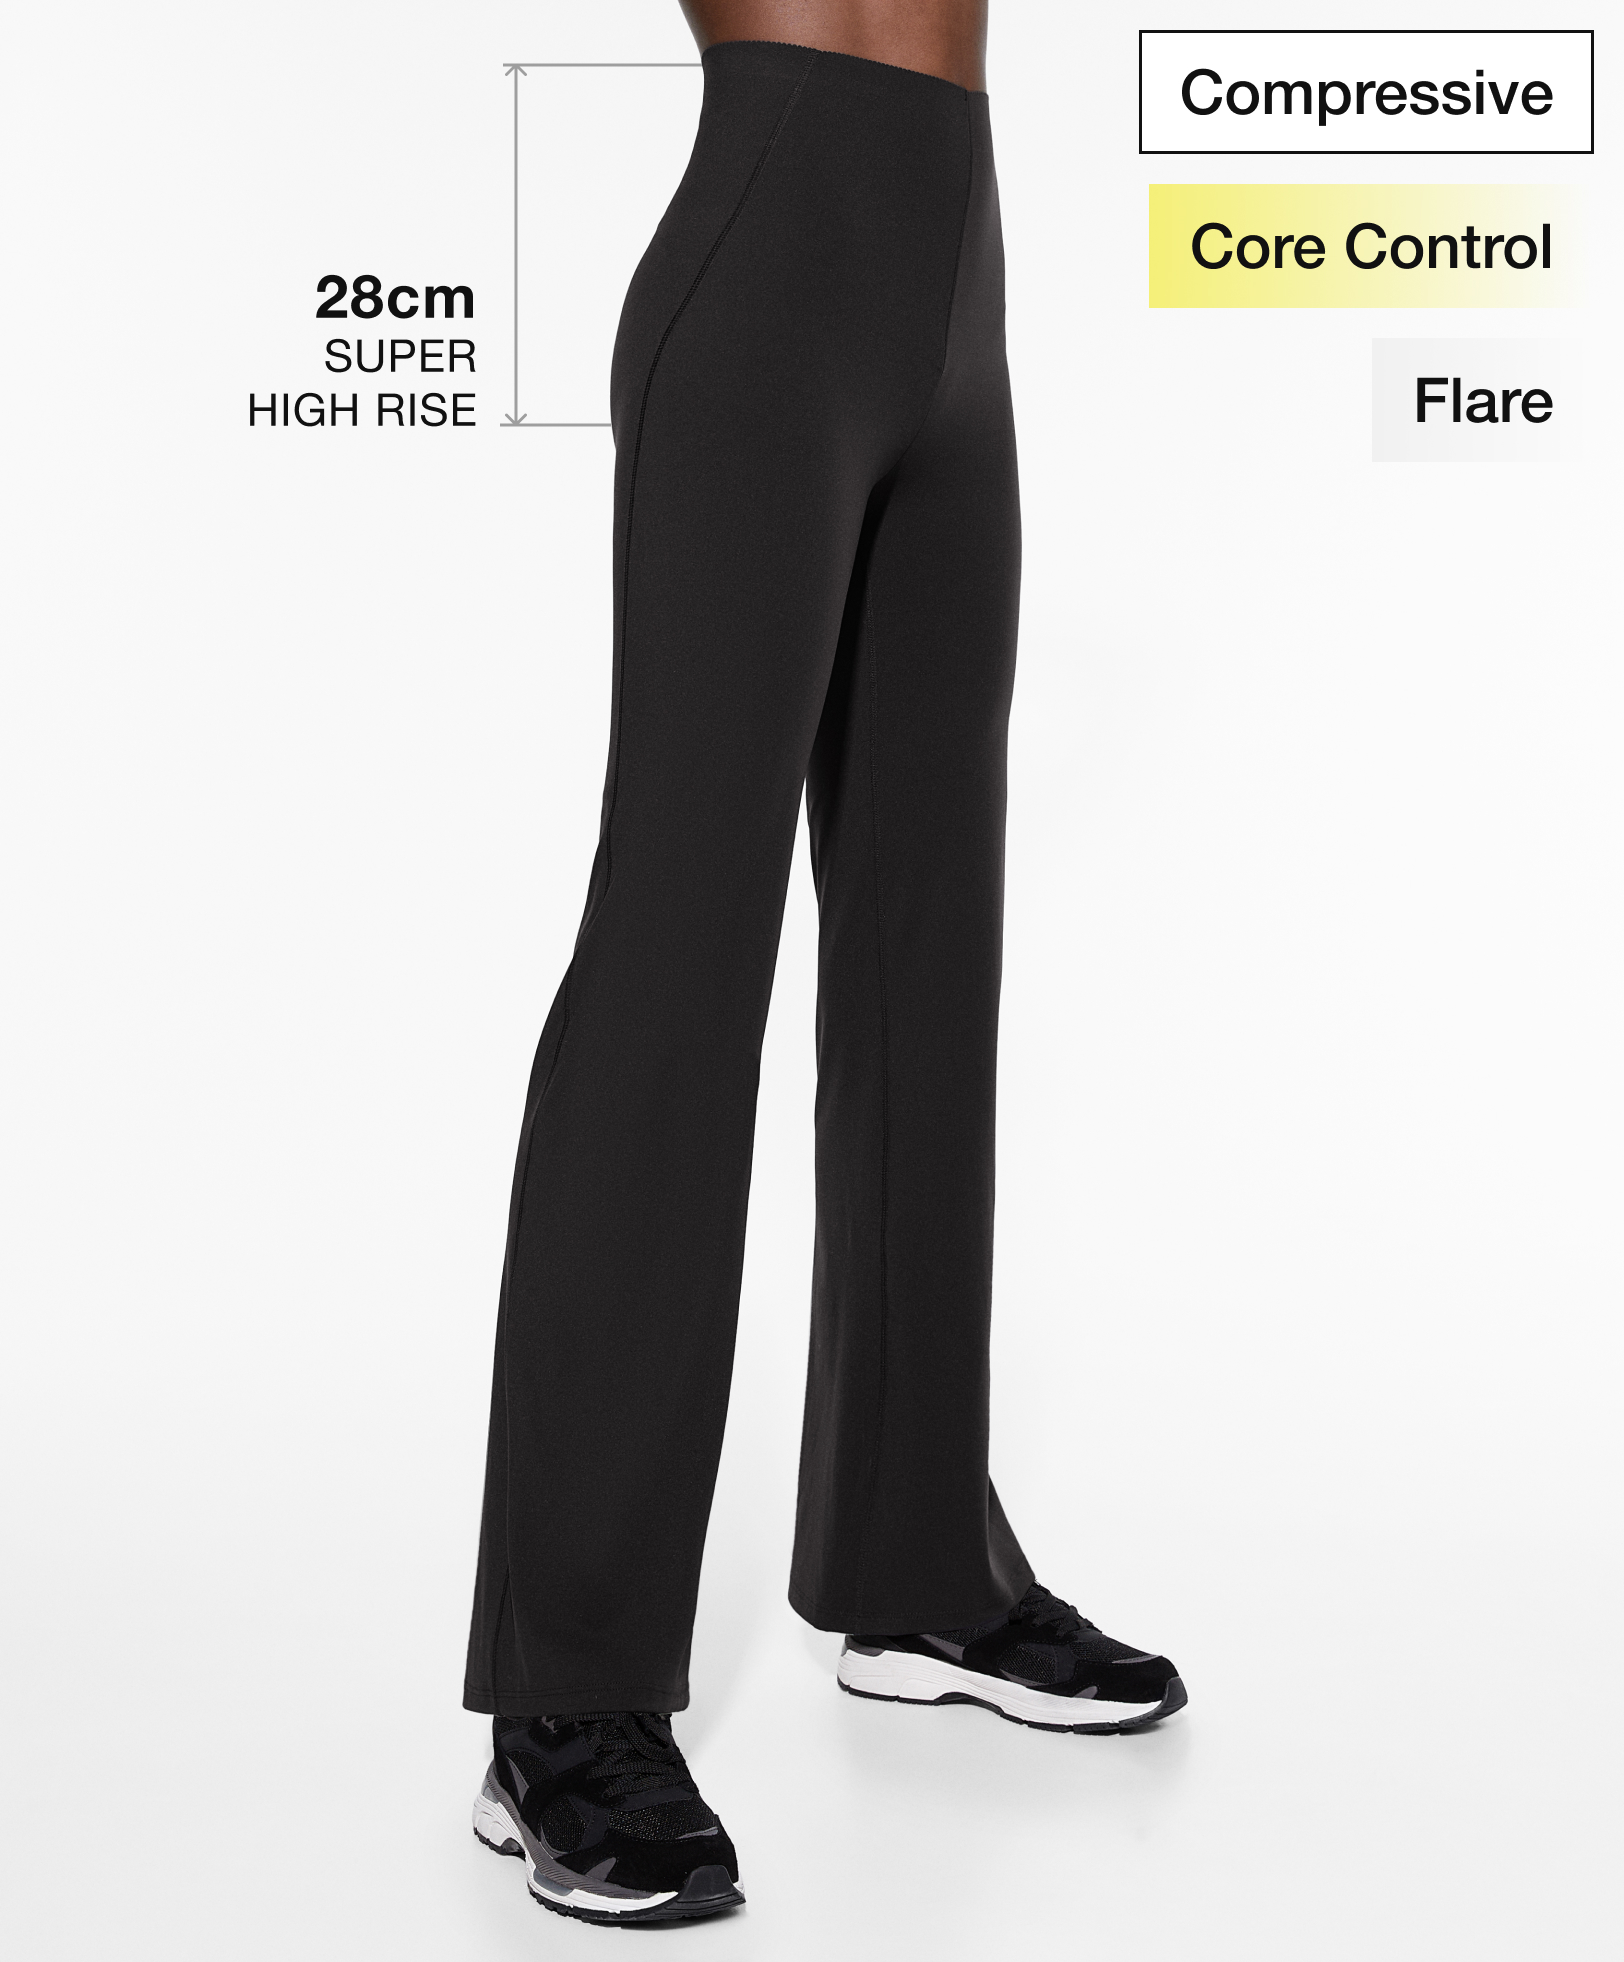 Core Control Compressive super-high-rise flare trousers